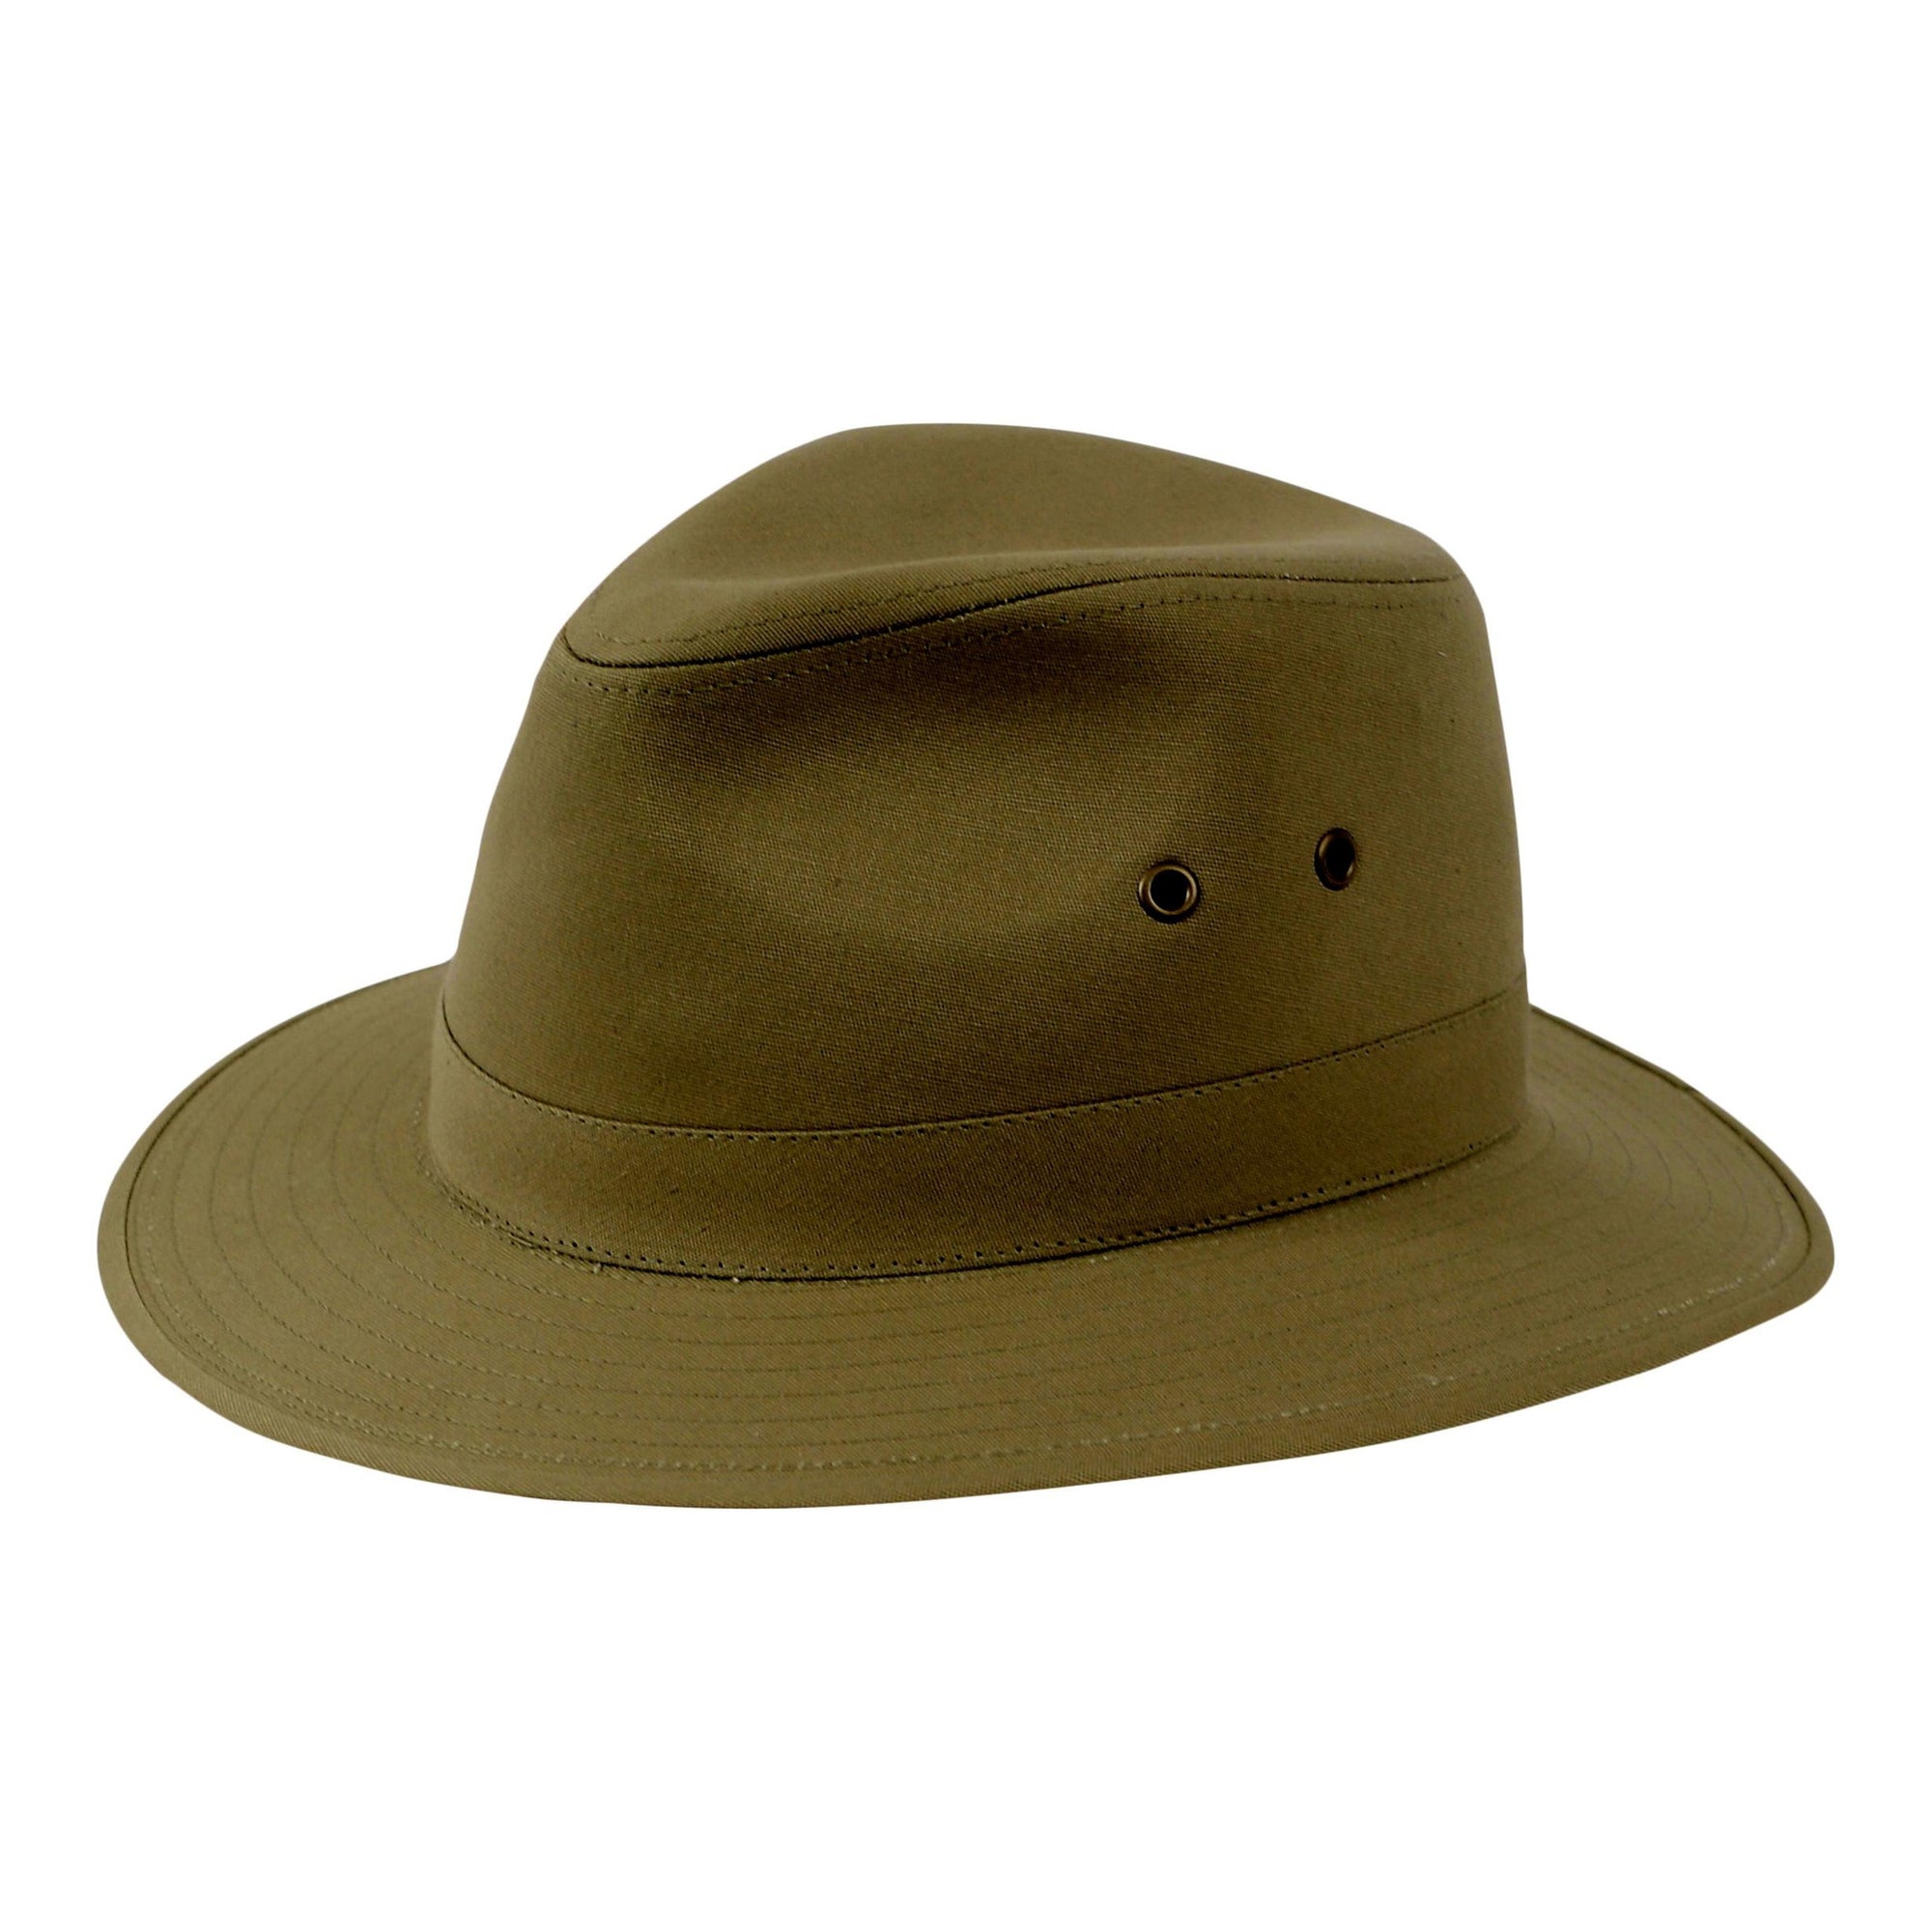 Stiff Canvas Safari Hat, Hats, Hickman & Bousfield - Hickman & Bousfield, Safari and Travel Clothing